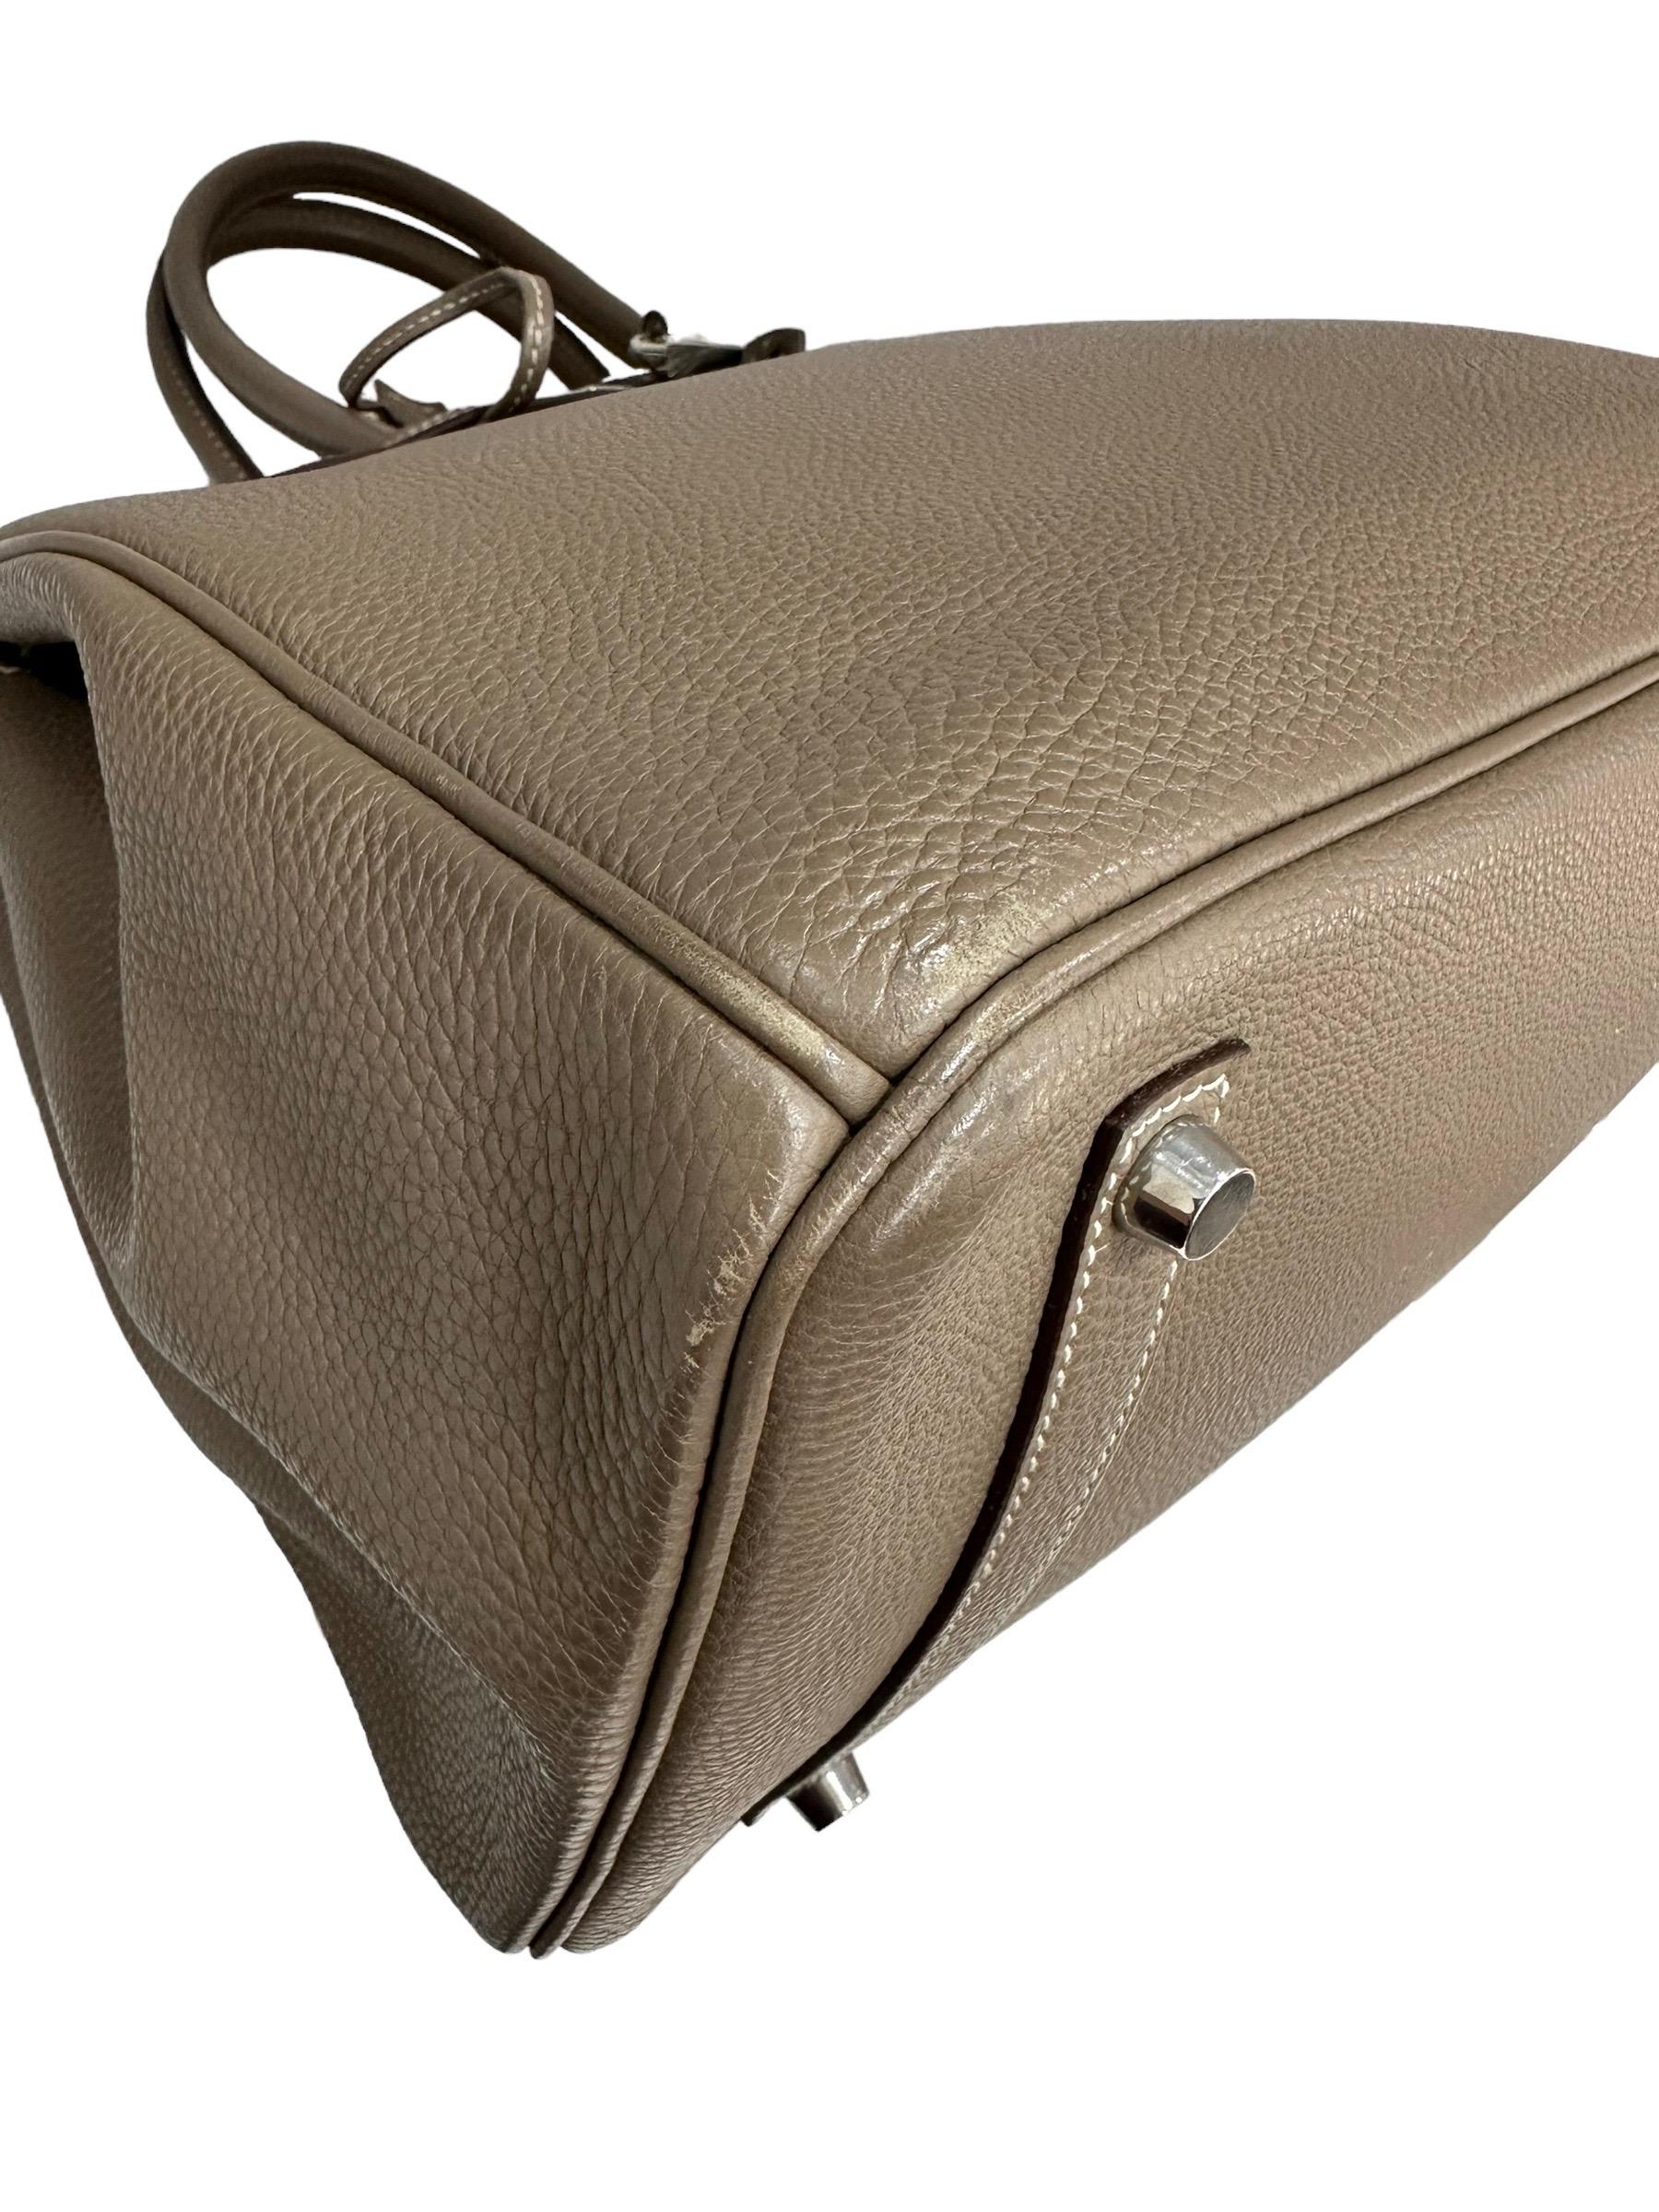 2008 Hermès Birkin 35 Togo Leather Toundra Top Handle Bag For Sale 6